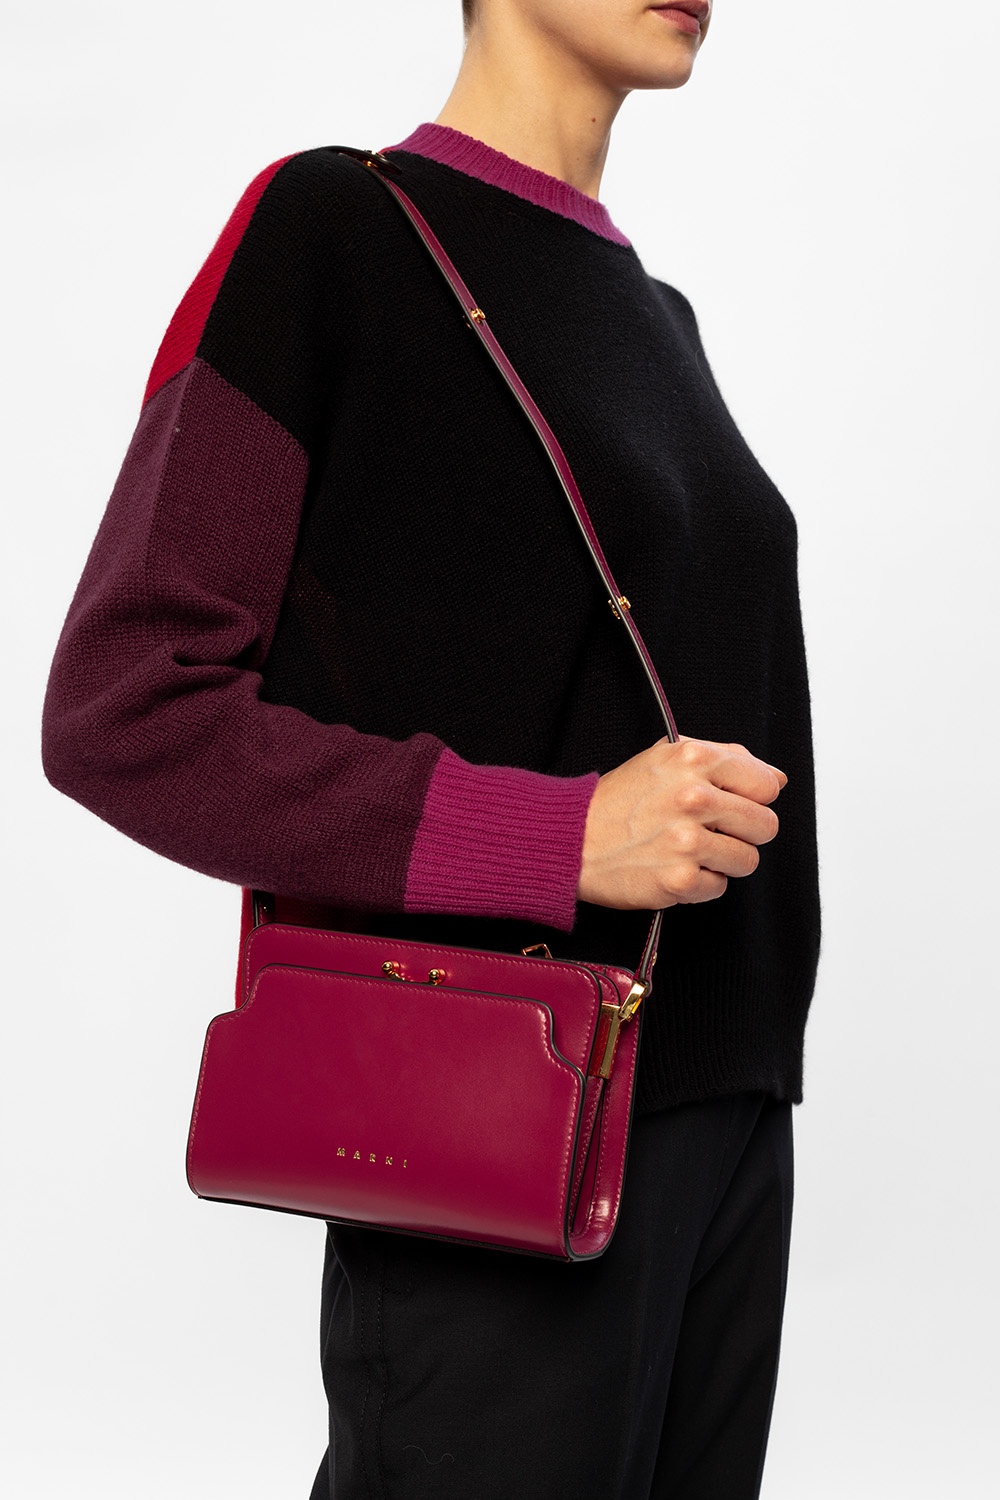 MARNI TRUNK MINI leather shoulder bag burgundy Used